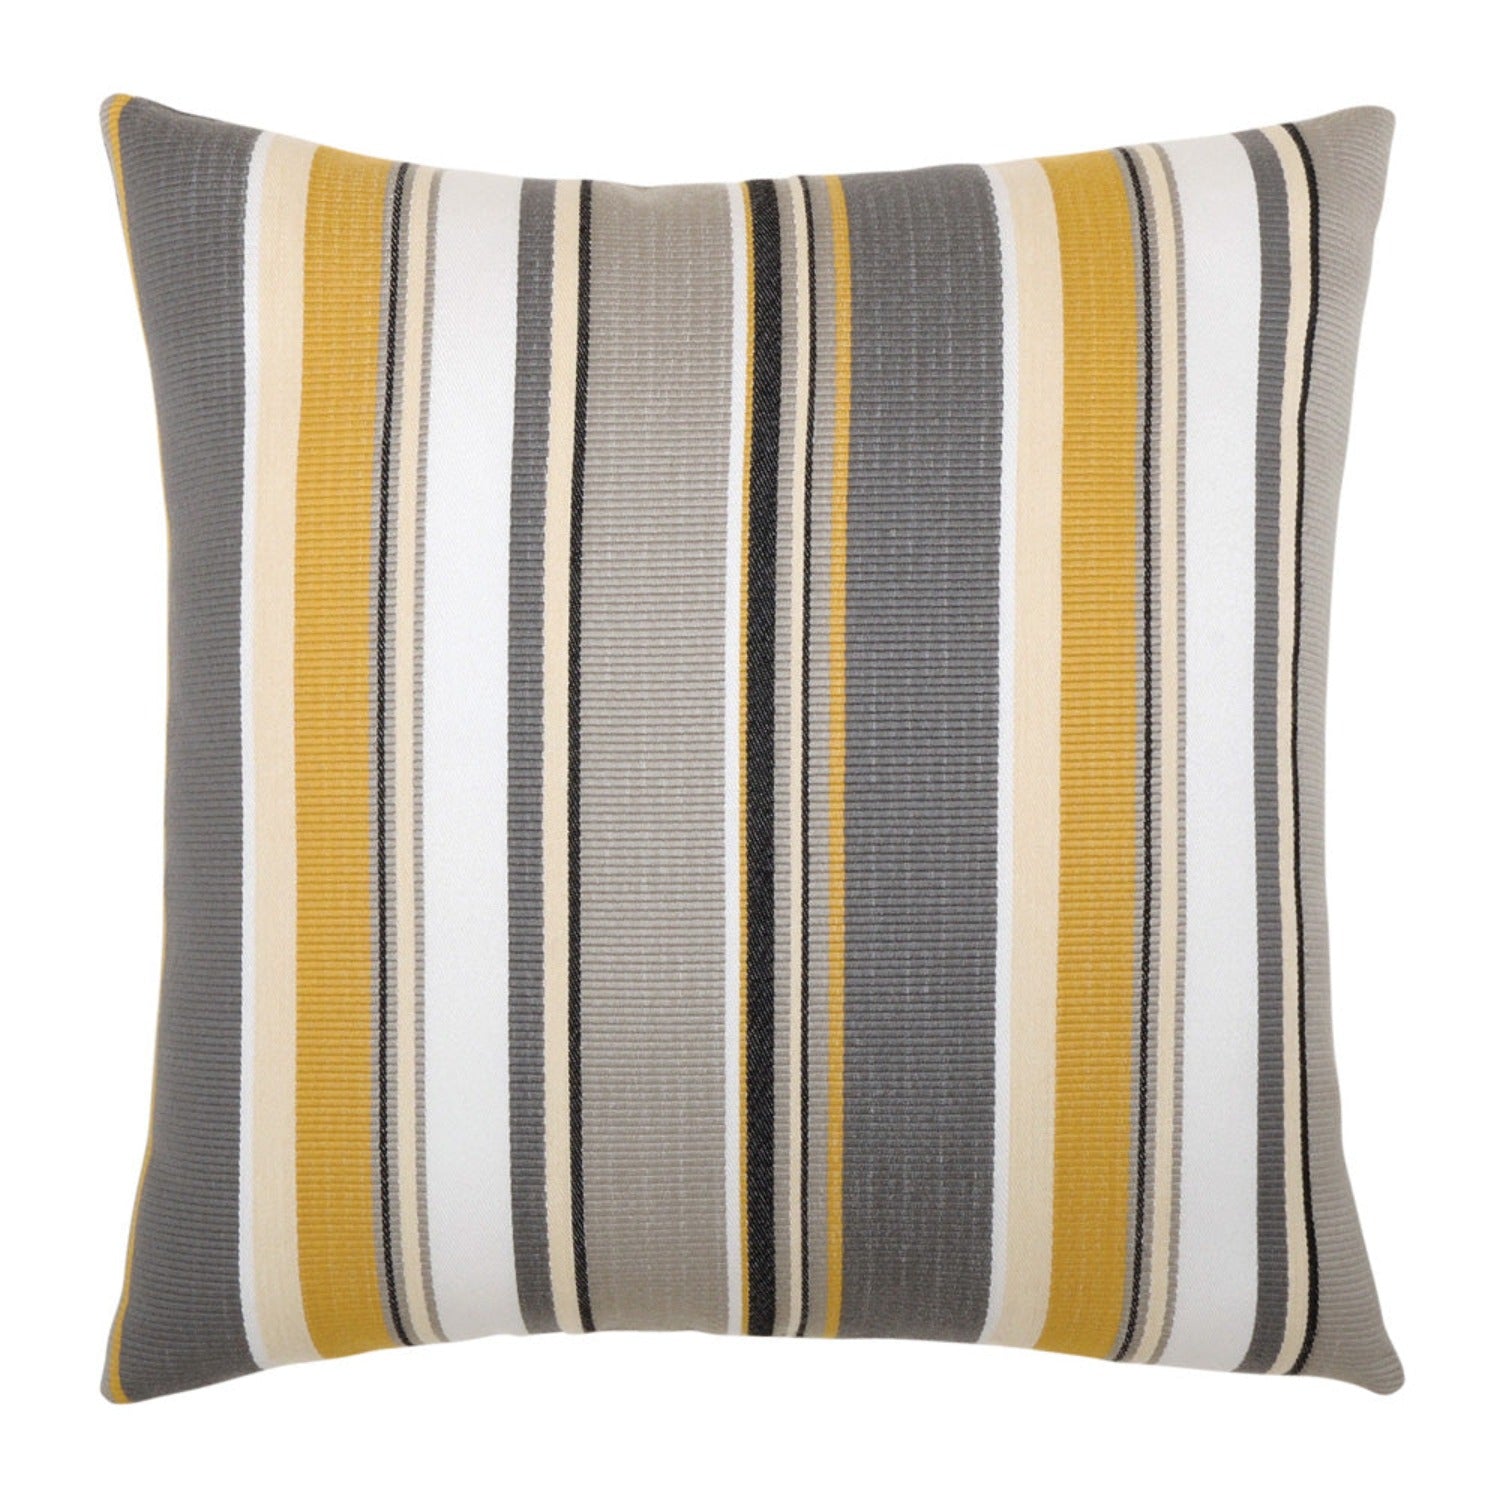 Elaine Smith 20 inch Square Outdoor Pillow - Shadow Stripe - Polyester Fiber Fill Throw Pillows 12031014